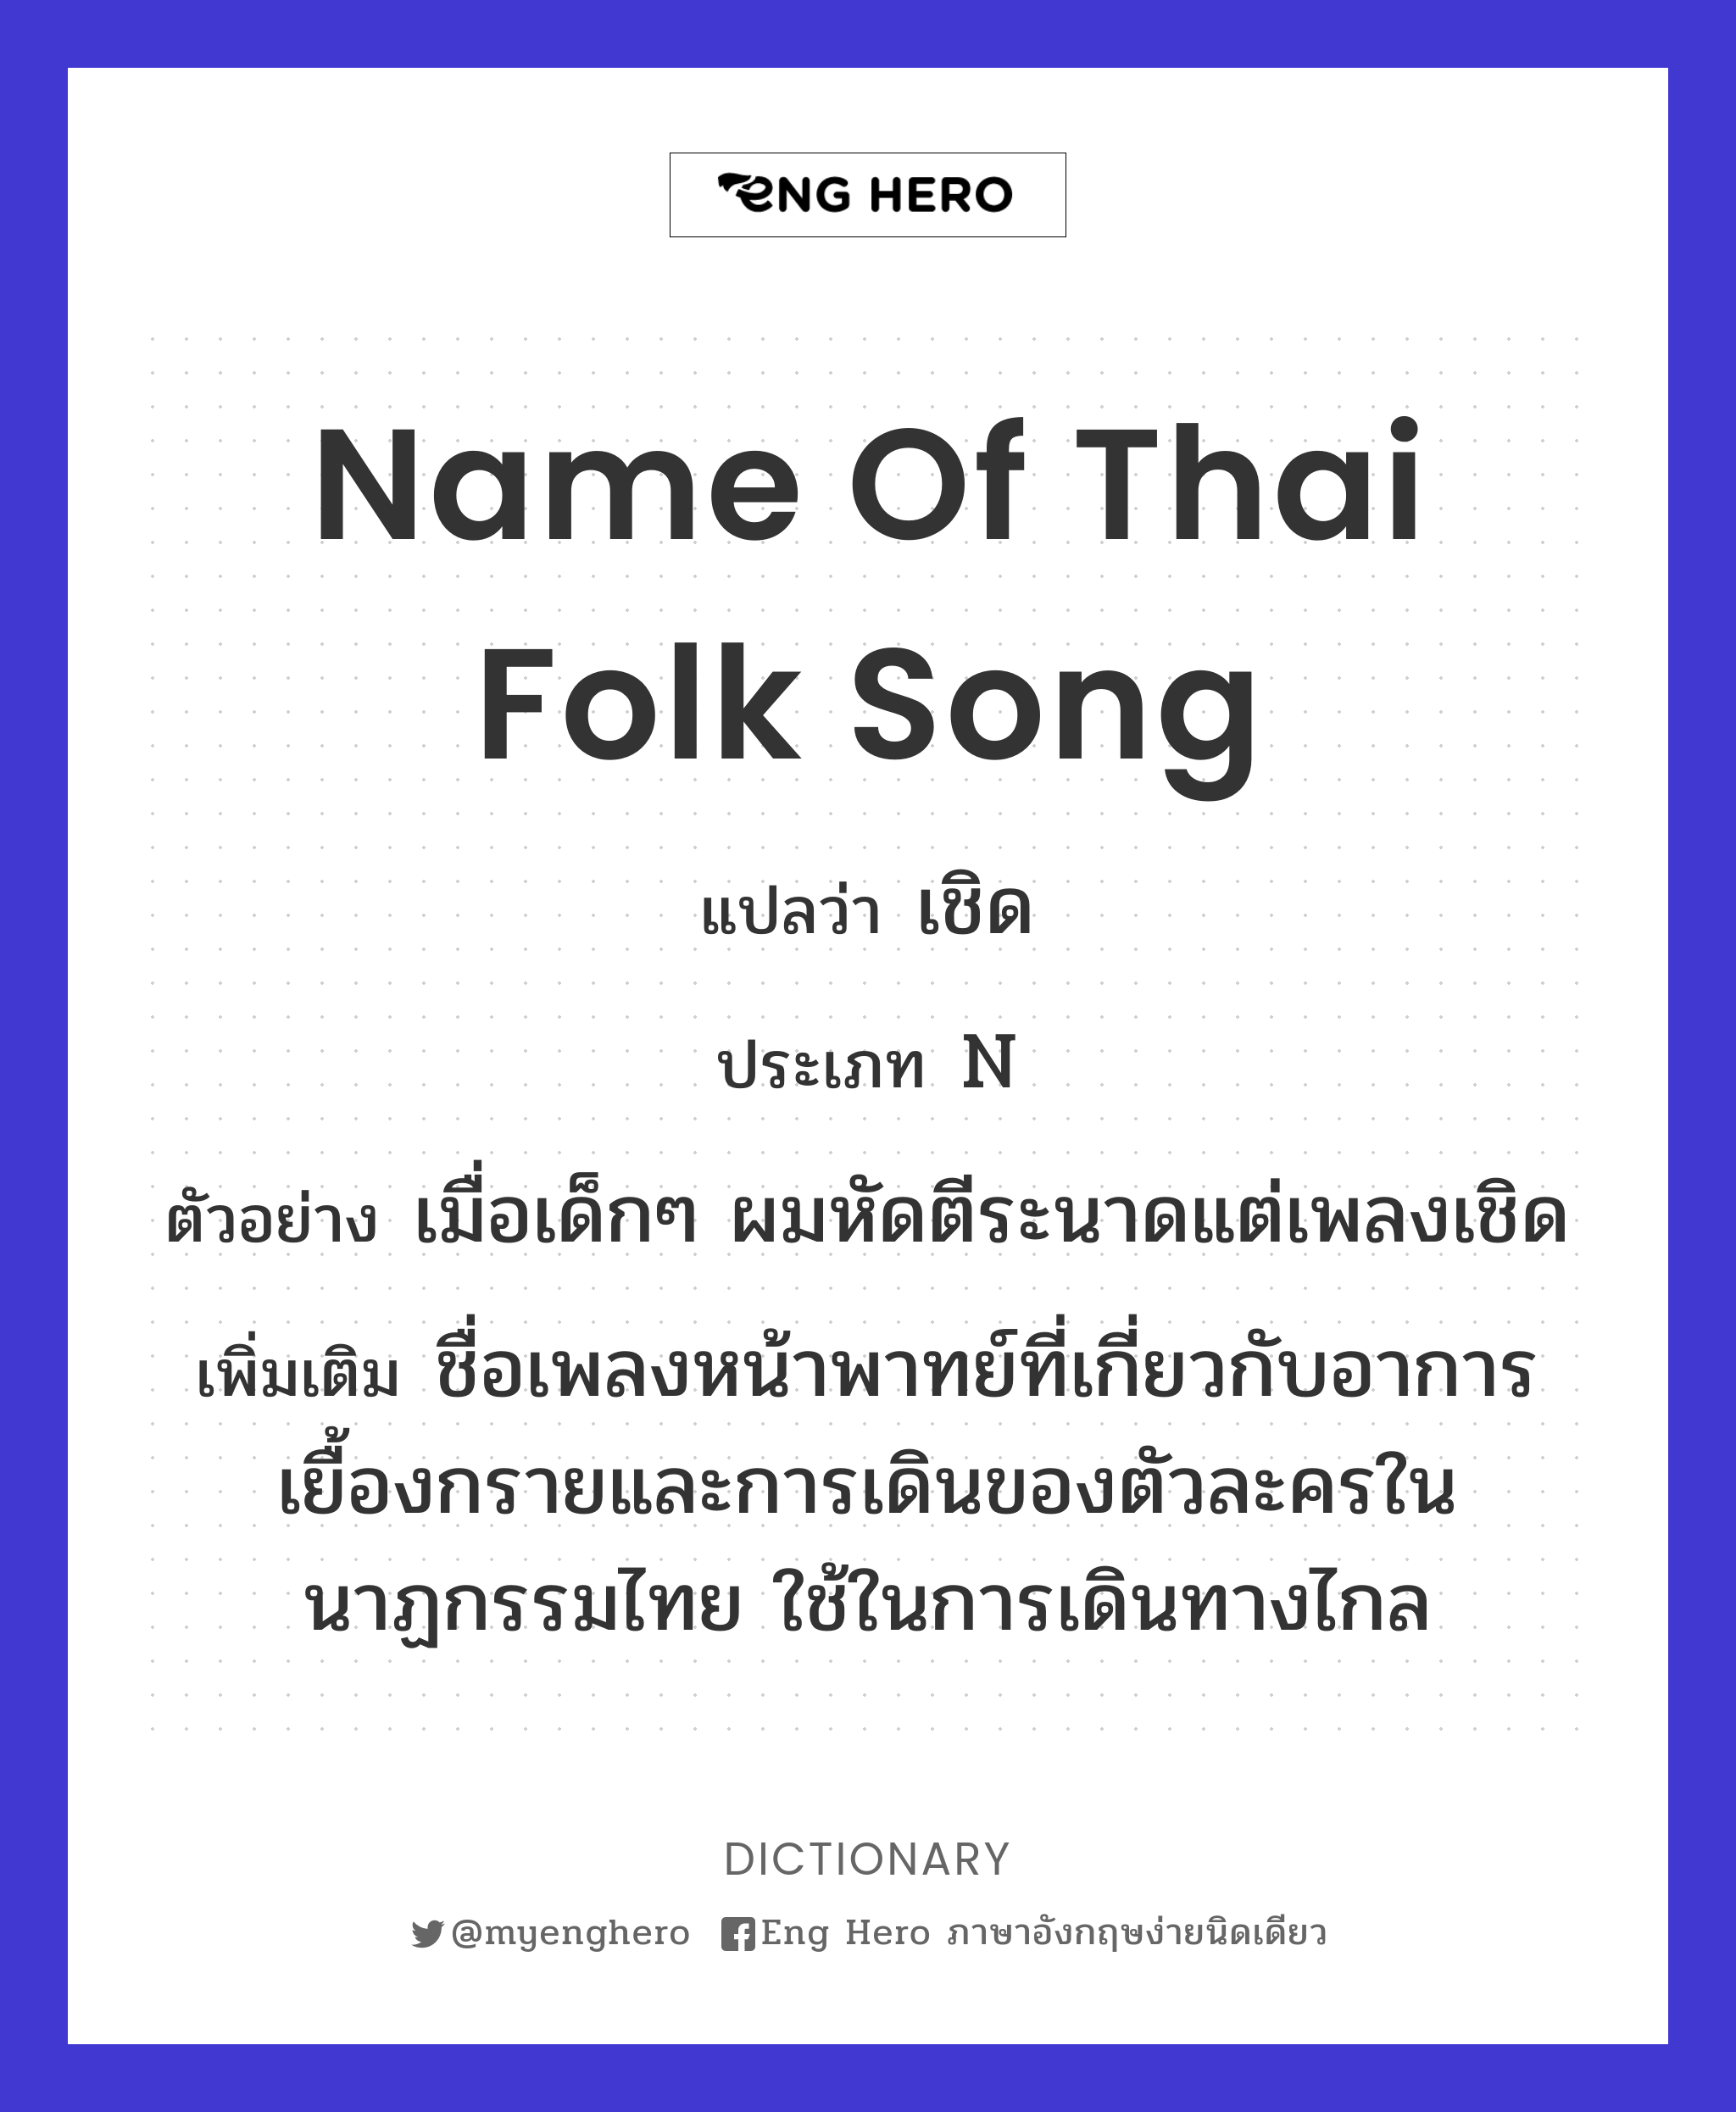 name of Thai folk song